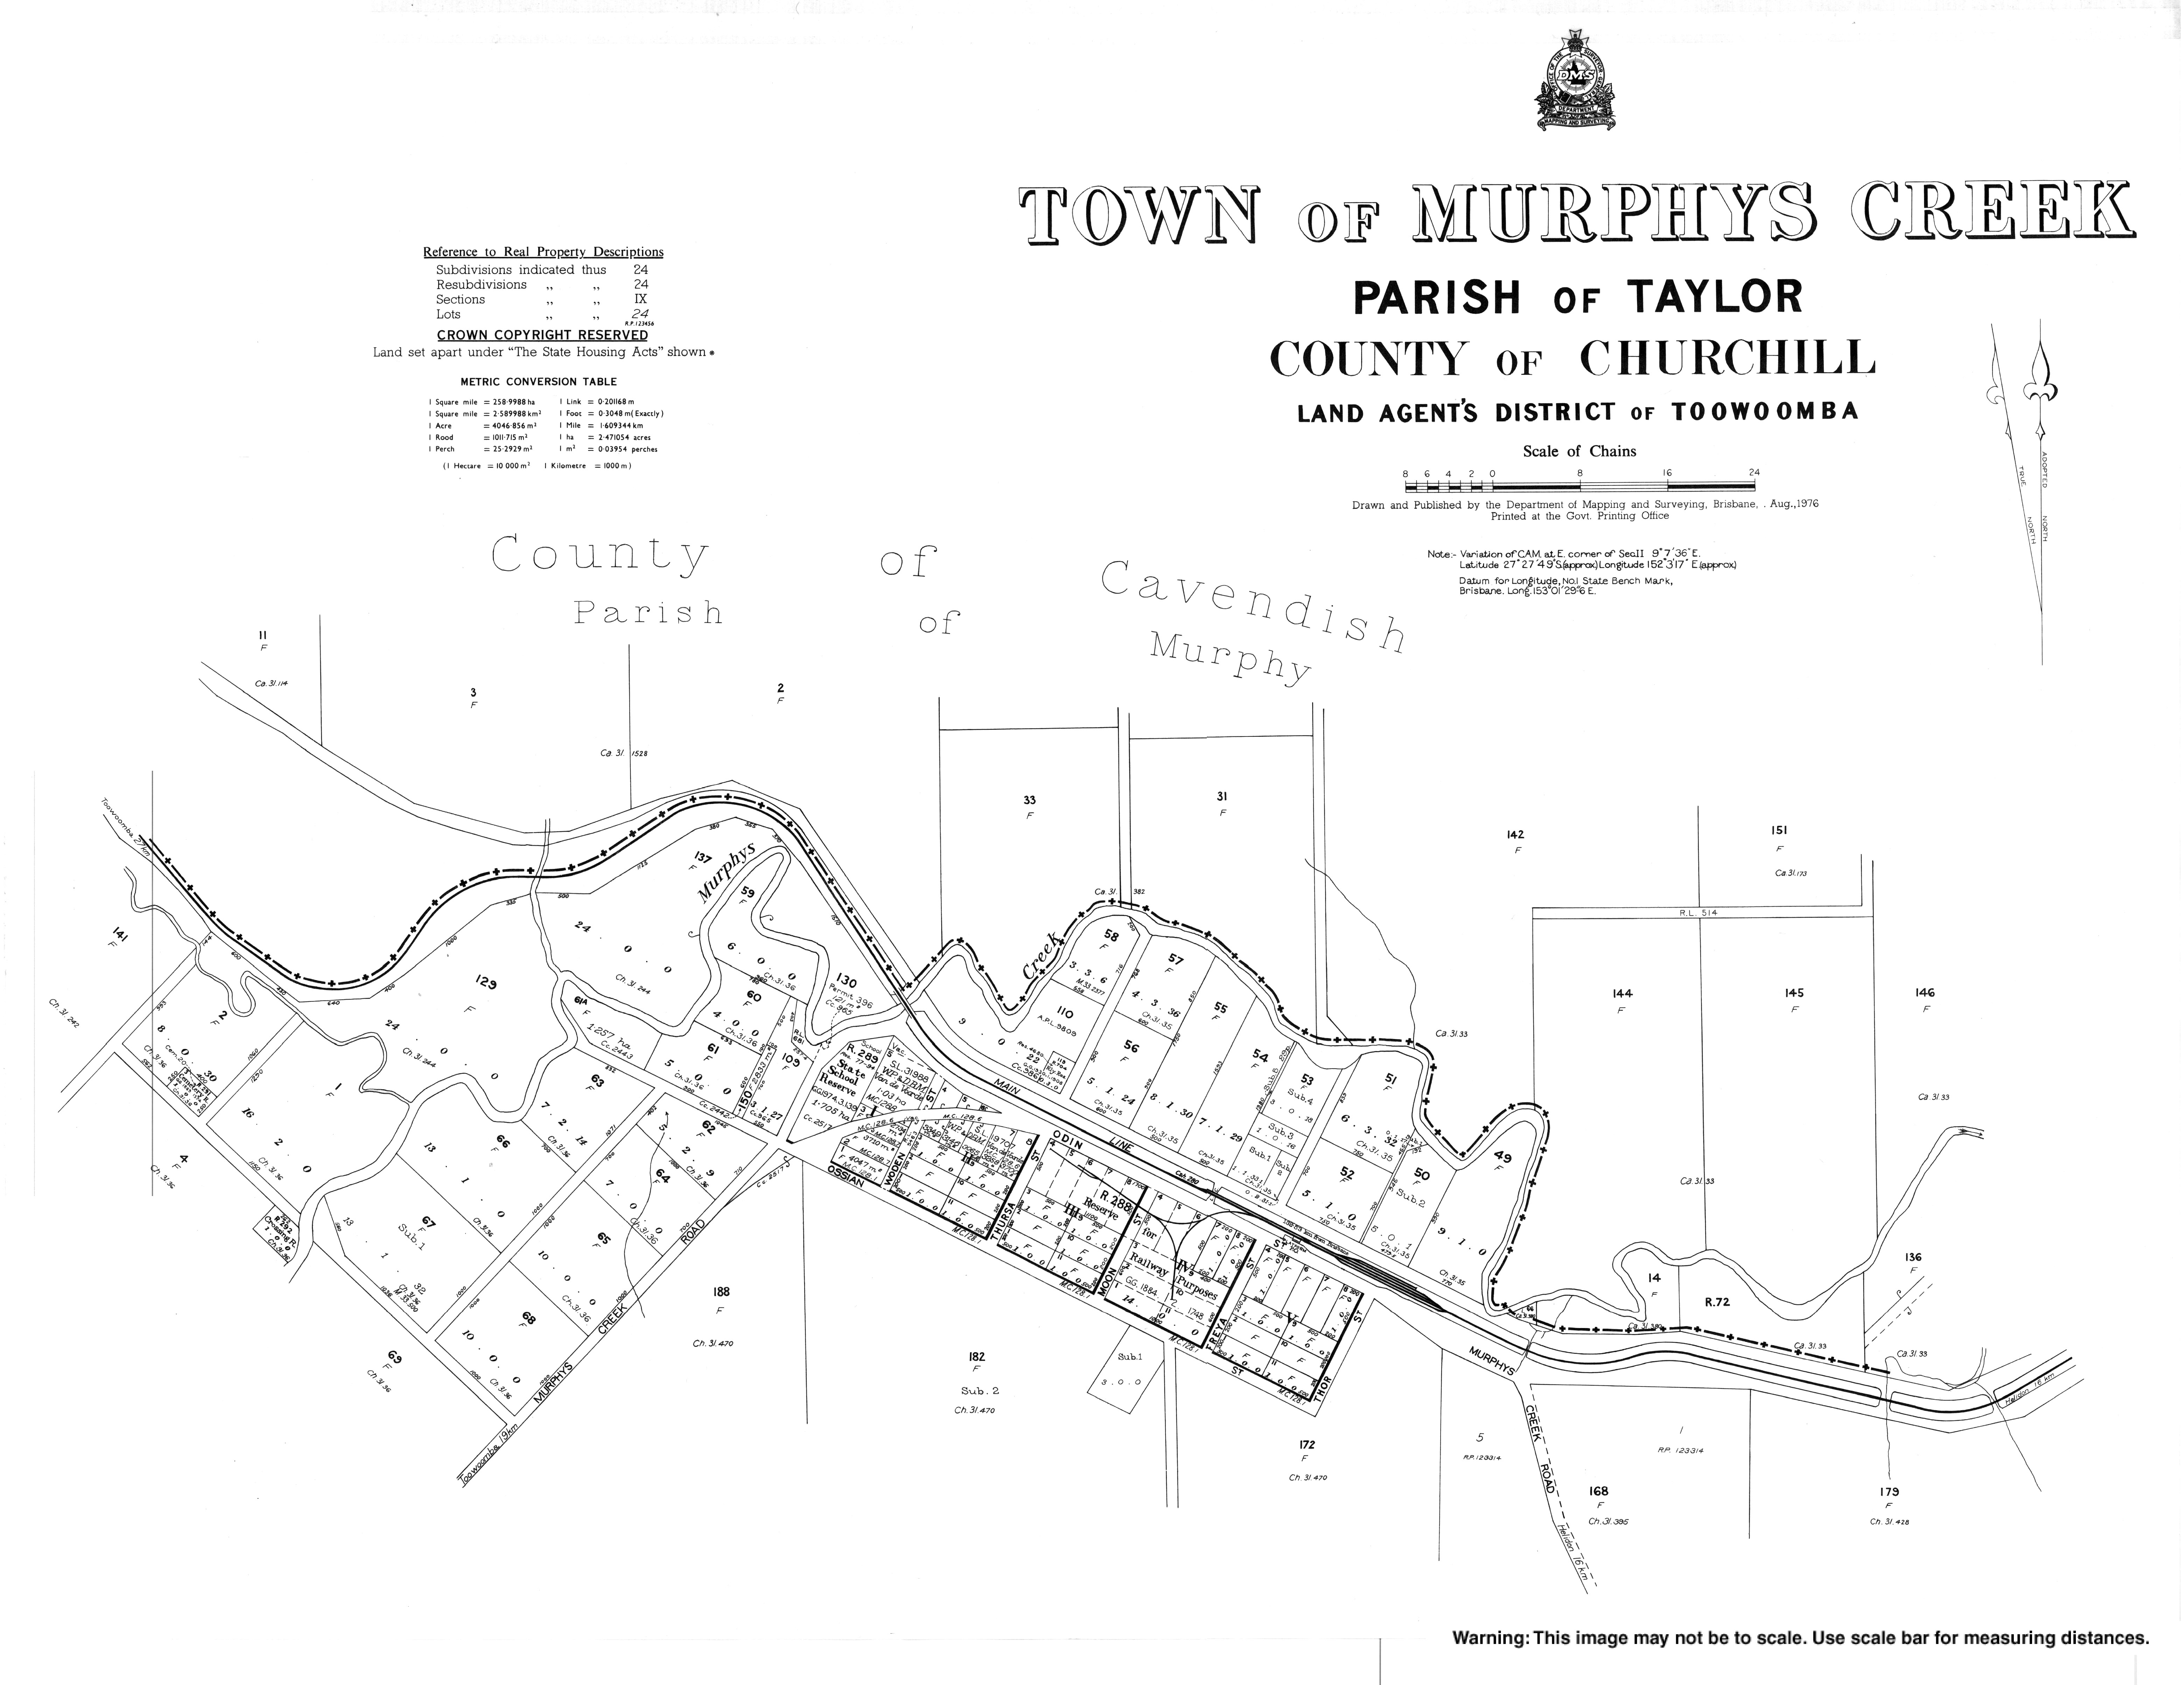 https://gisservices.information.qld.gov.au/arcgis/rest/directories/historicalscans/cad_scans/cad-map-town-murphys-creek-1976.jpg